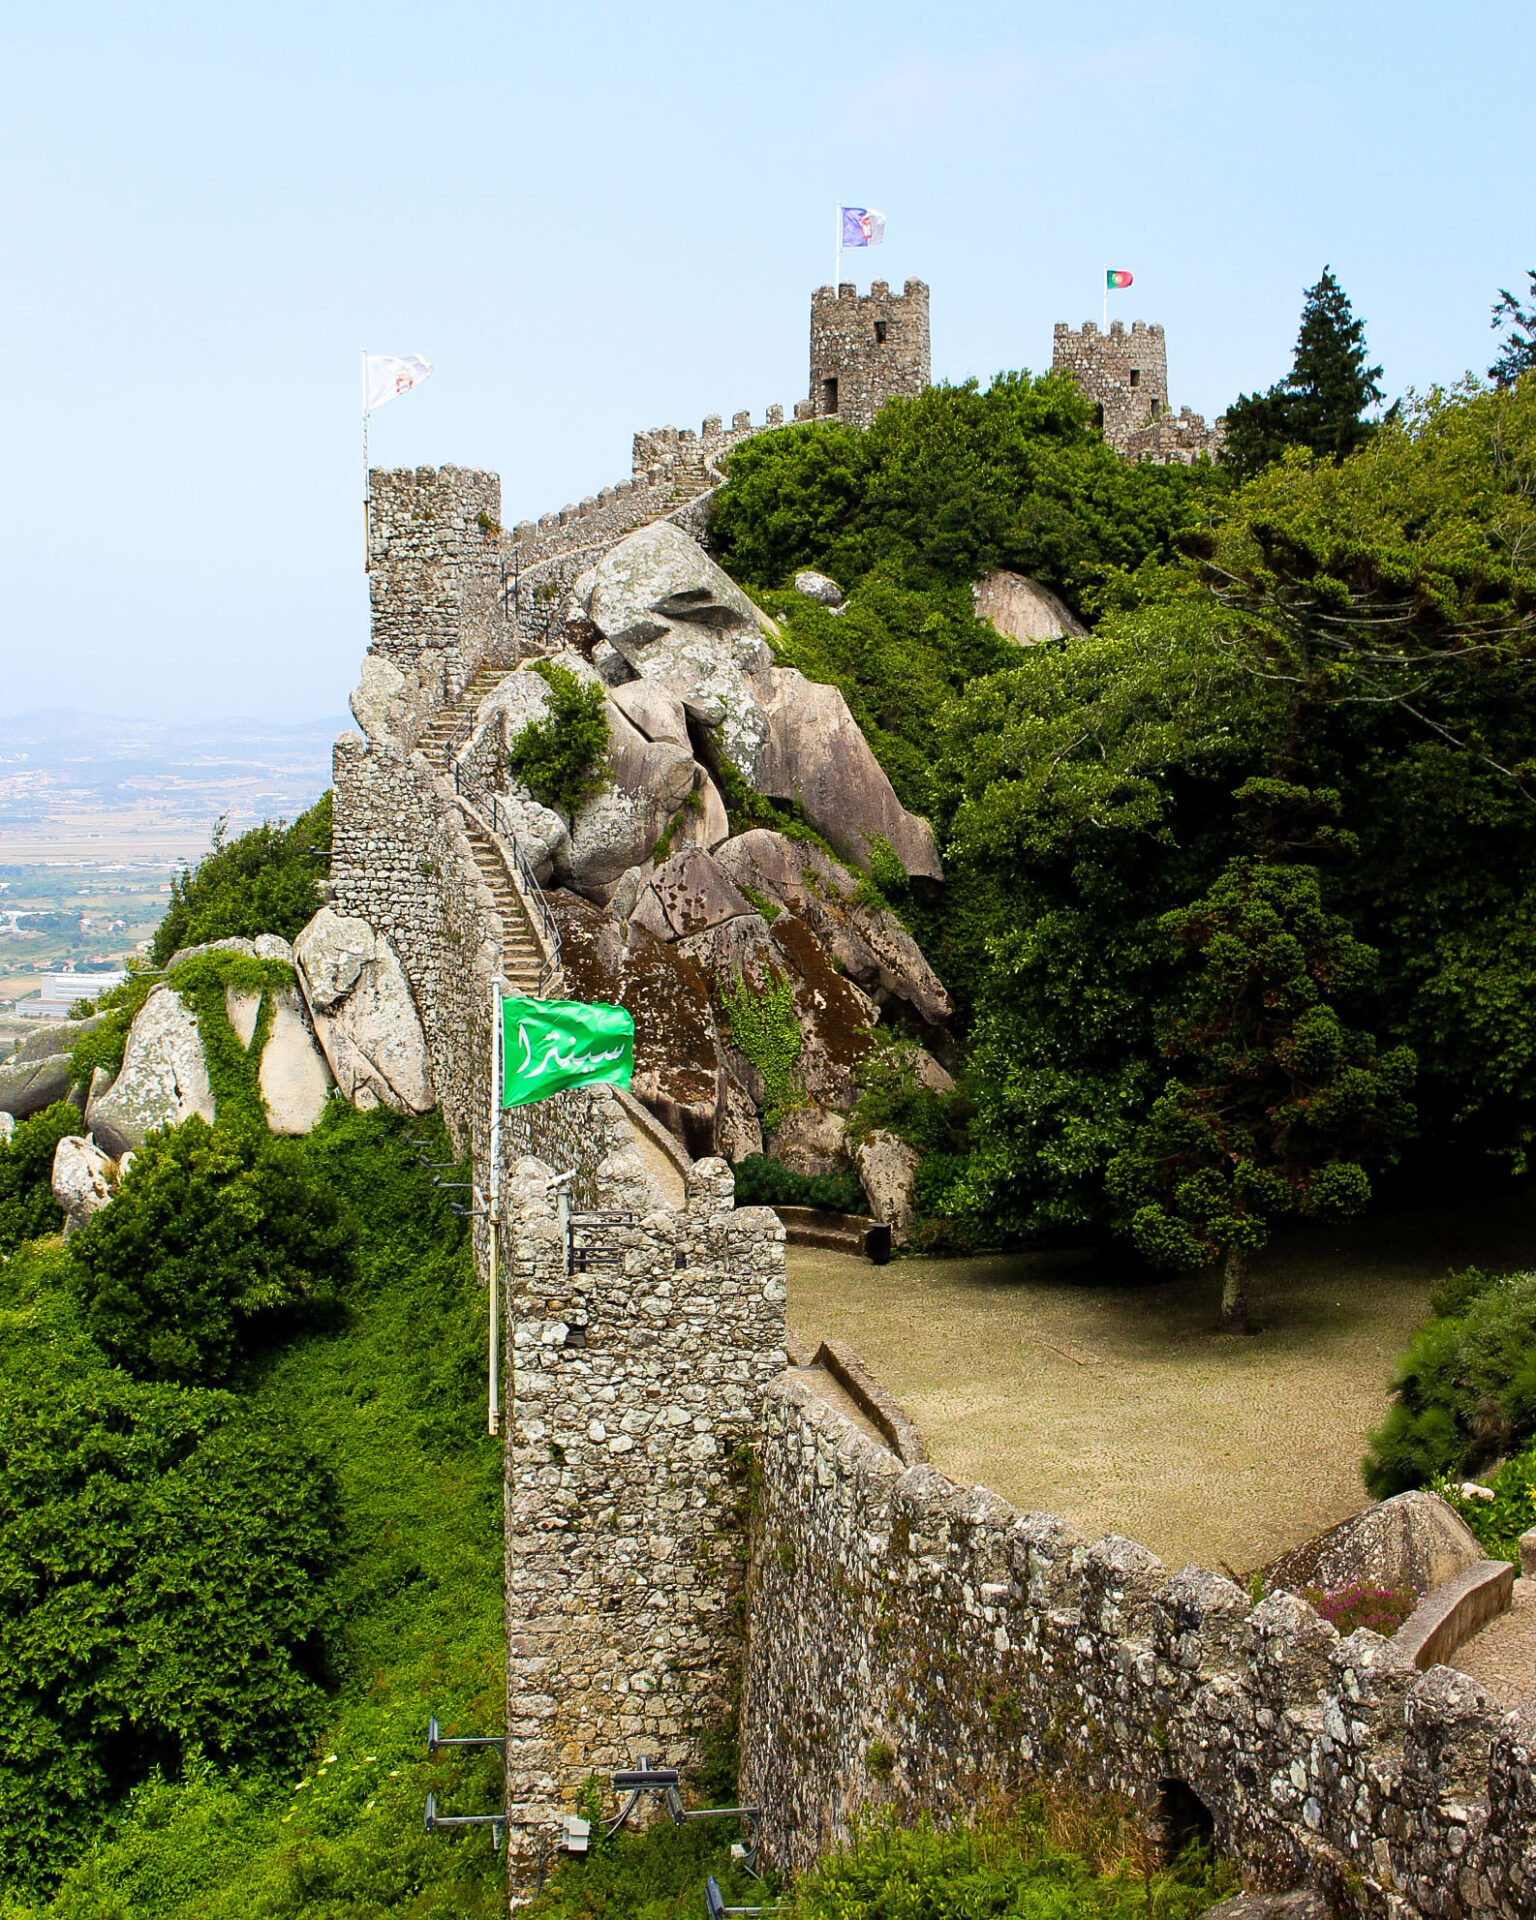 Moorish Castle - 10 Must-See Attractions in Sintra